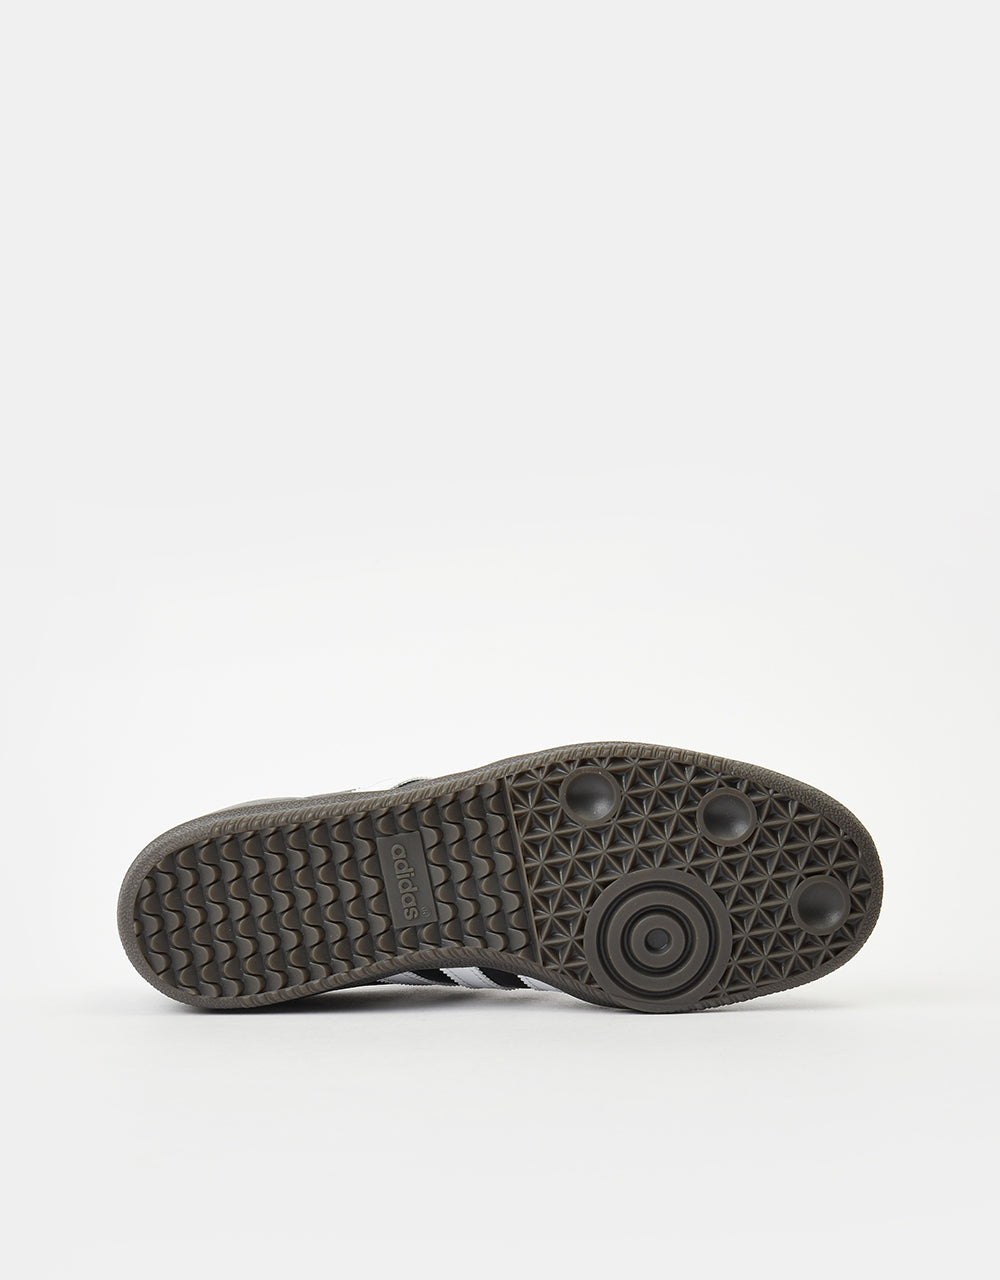 Adidas Samba ADV Skate Shoes - Black/White/Gold Metallic